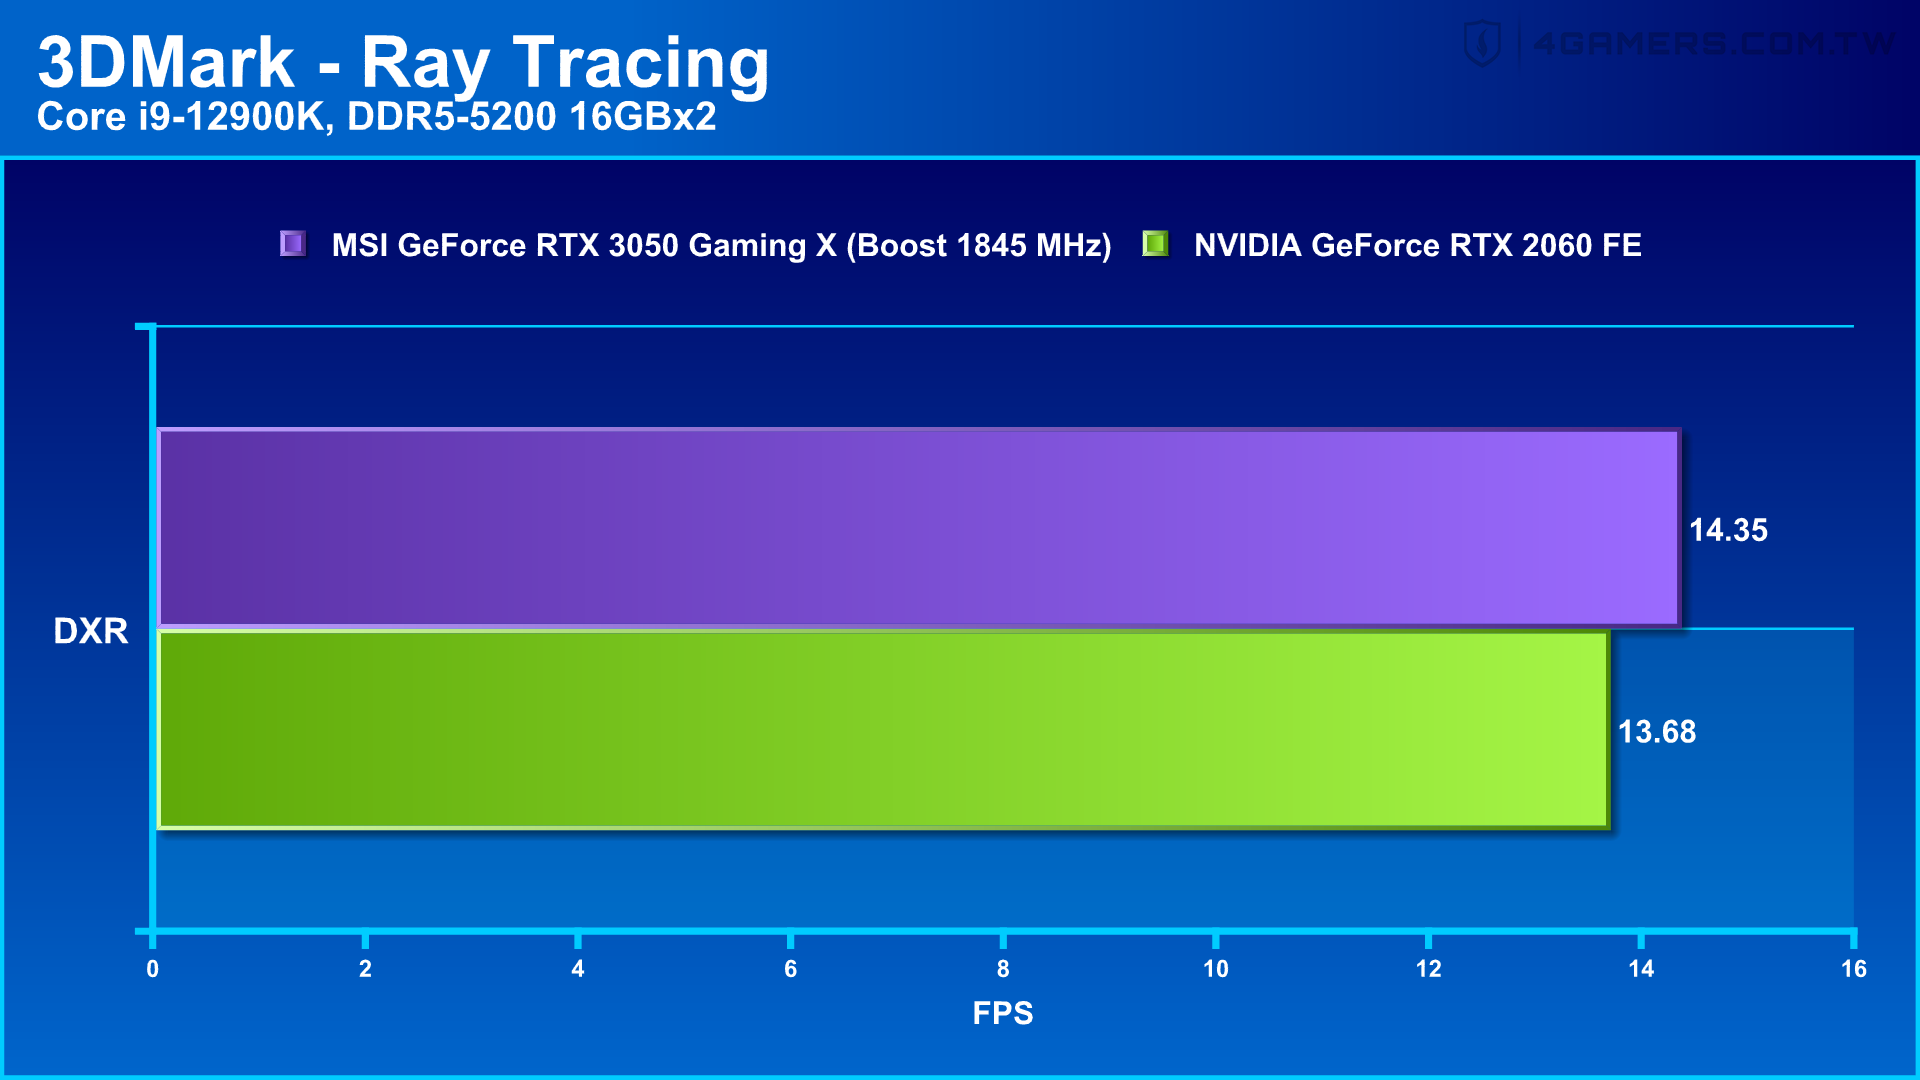 MSI GeForce RTX 3050 Gaming X